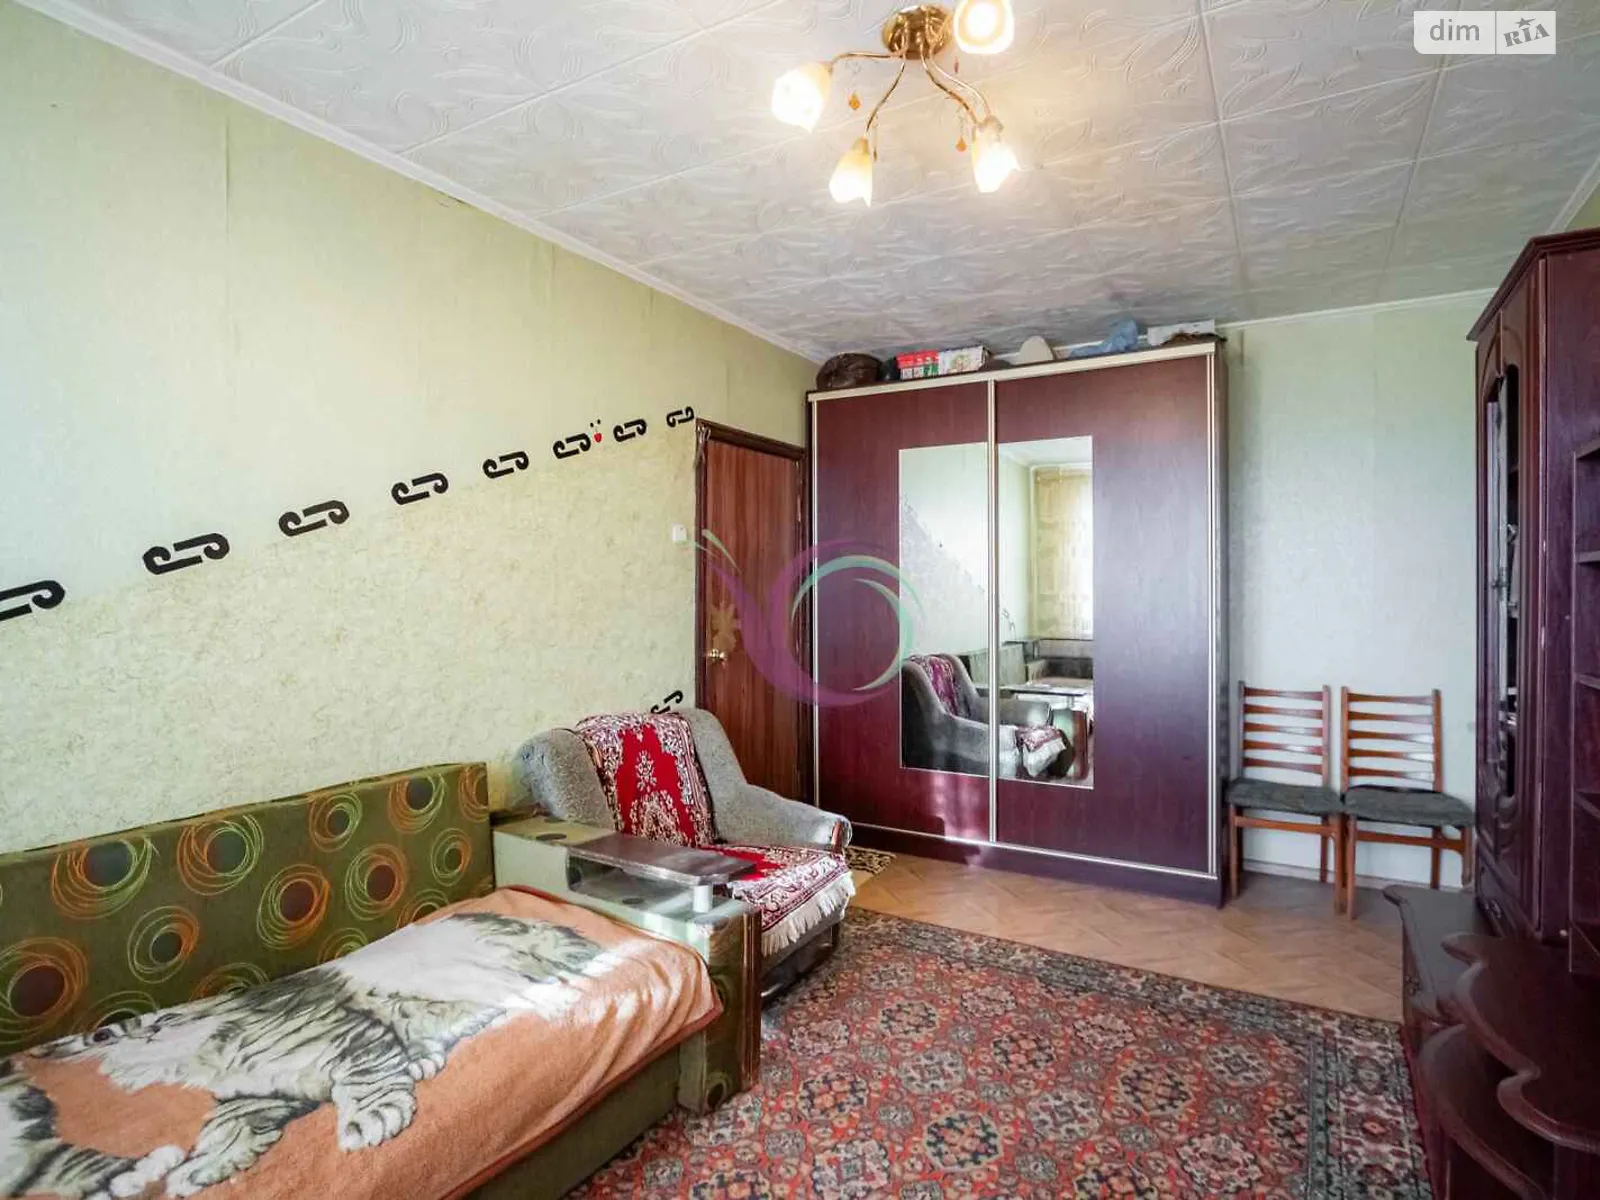 2-кімнатна квартира 49.9 кв. м у Луцьку - фото 3